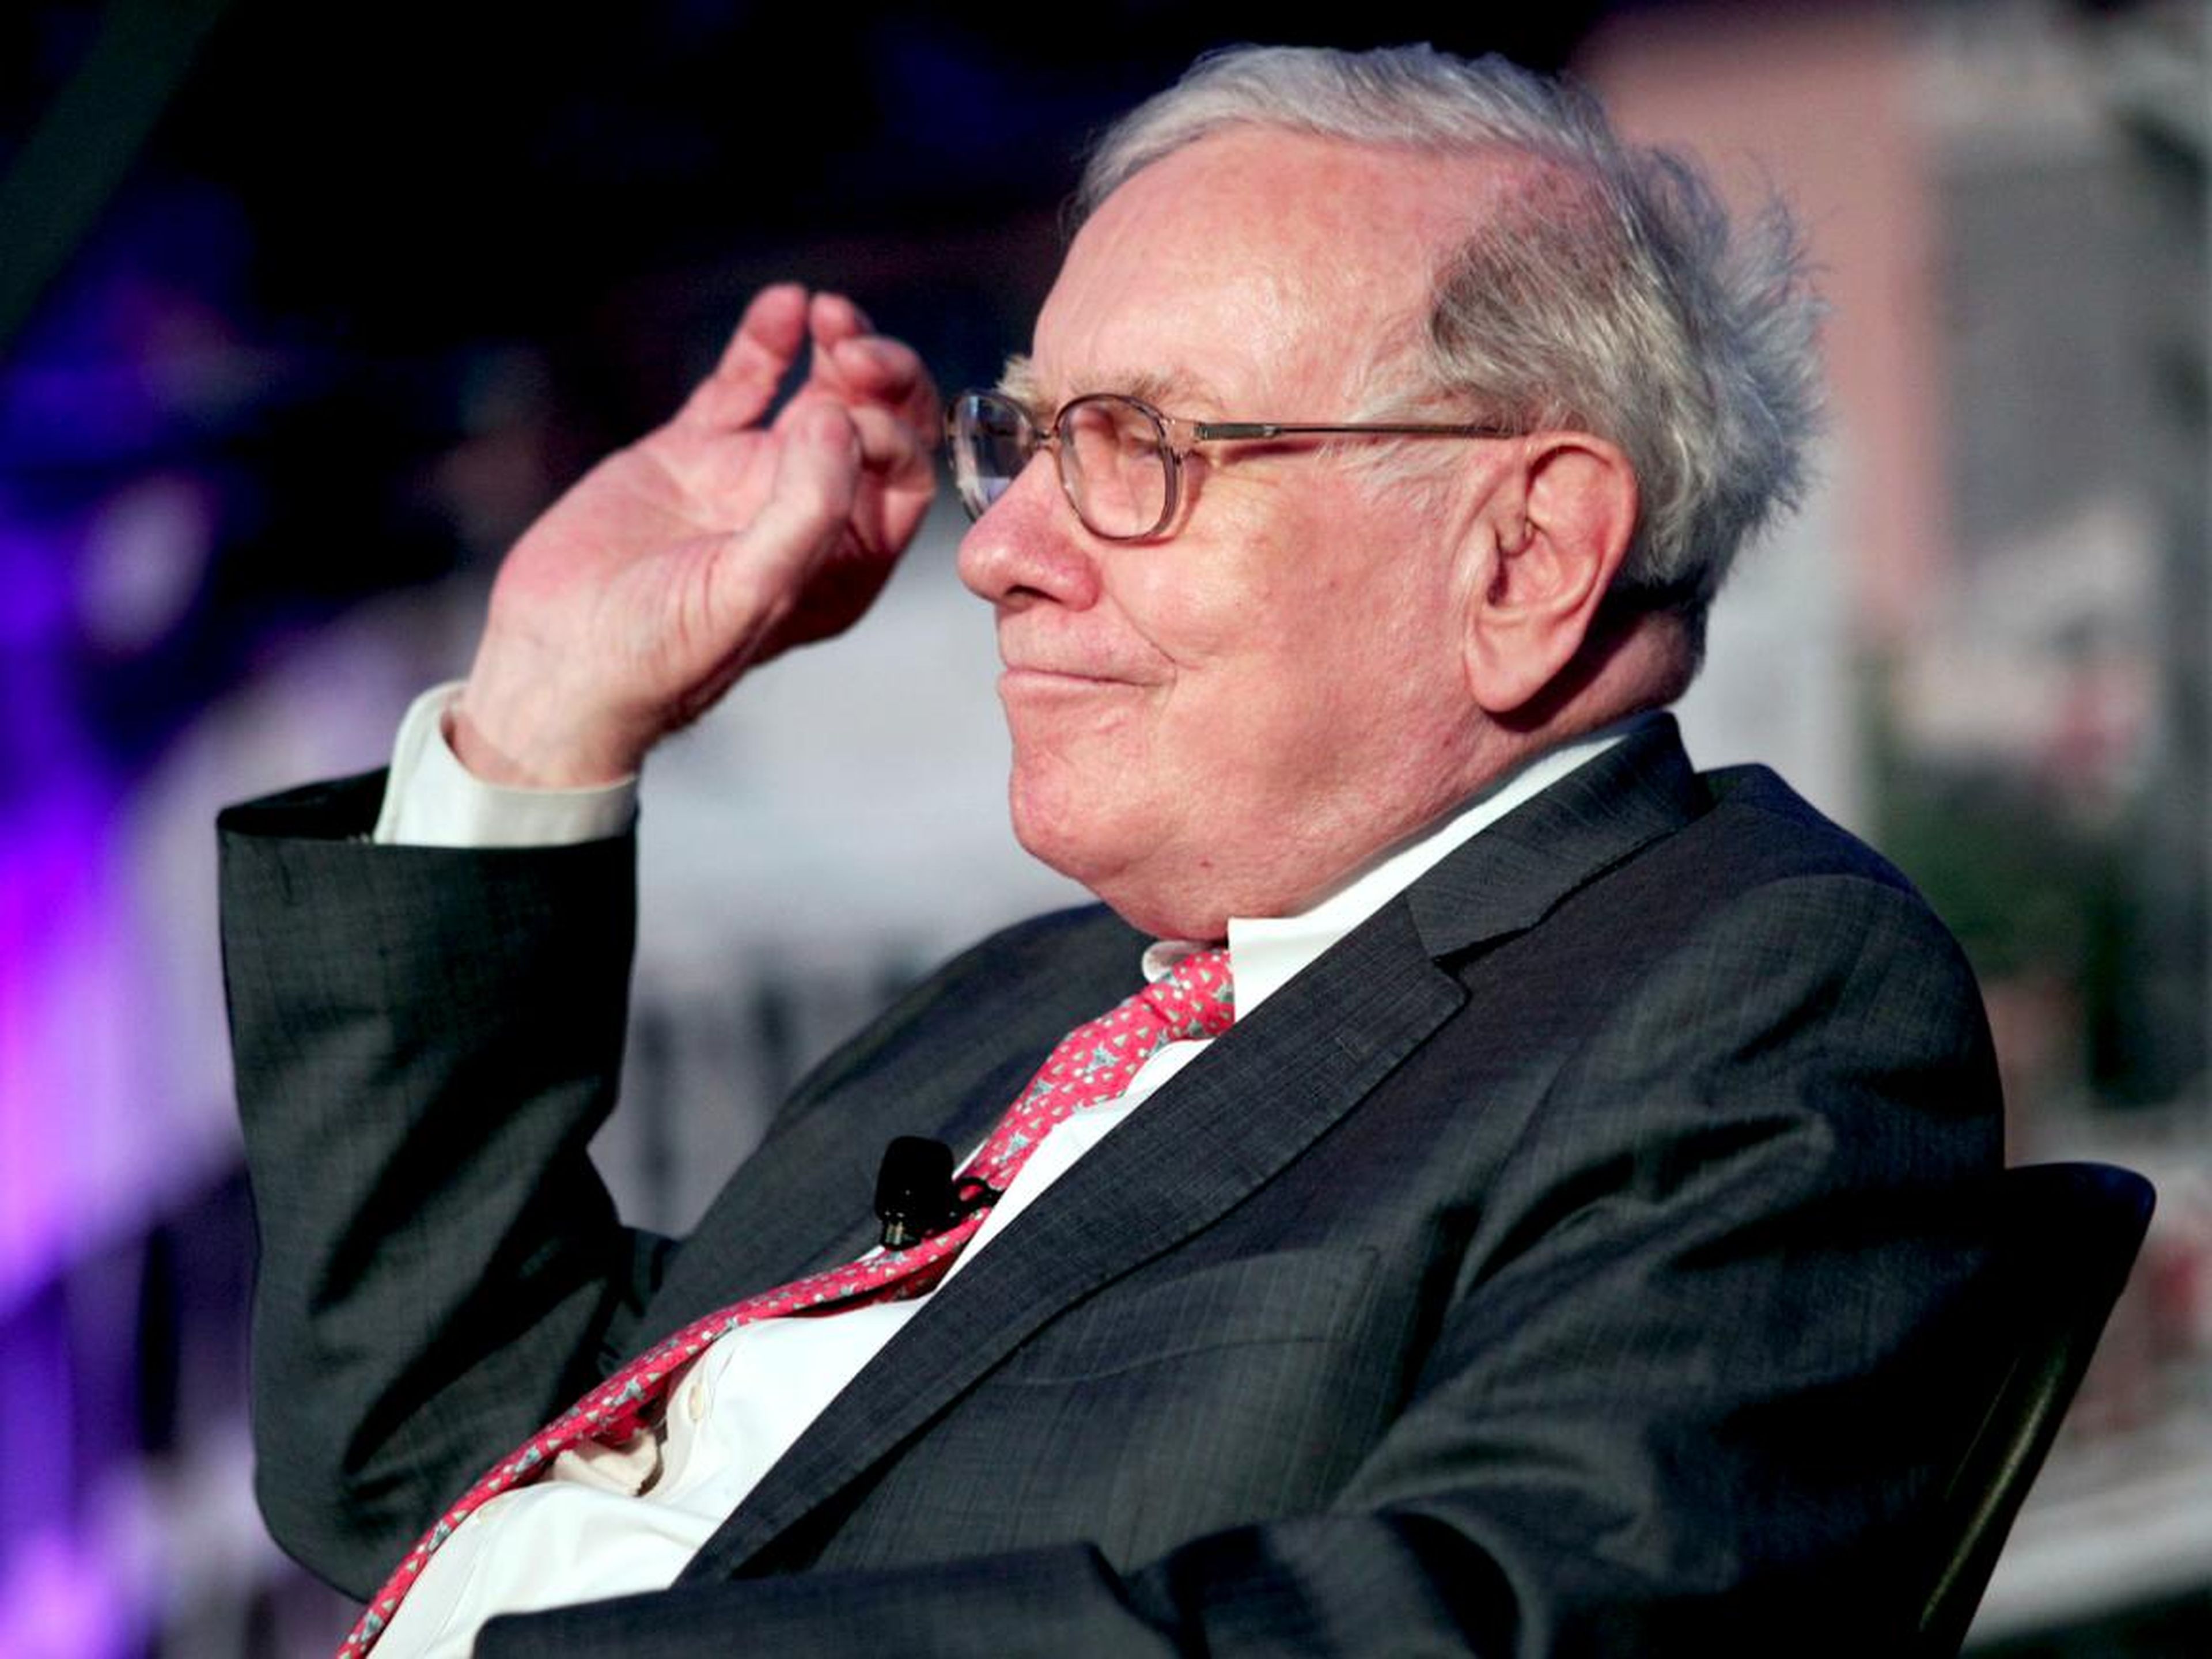 Warren Buffett, one of the richest men, lives a relatively frugal life.